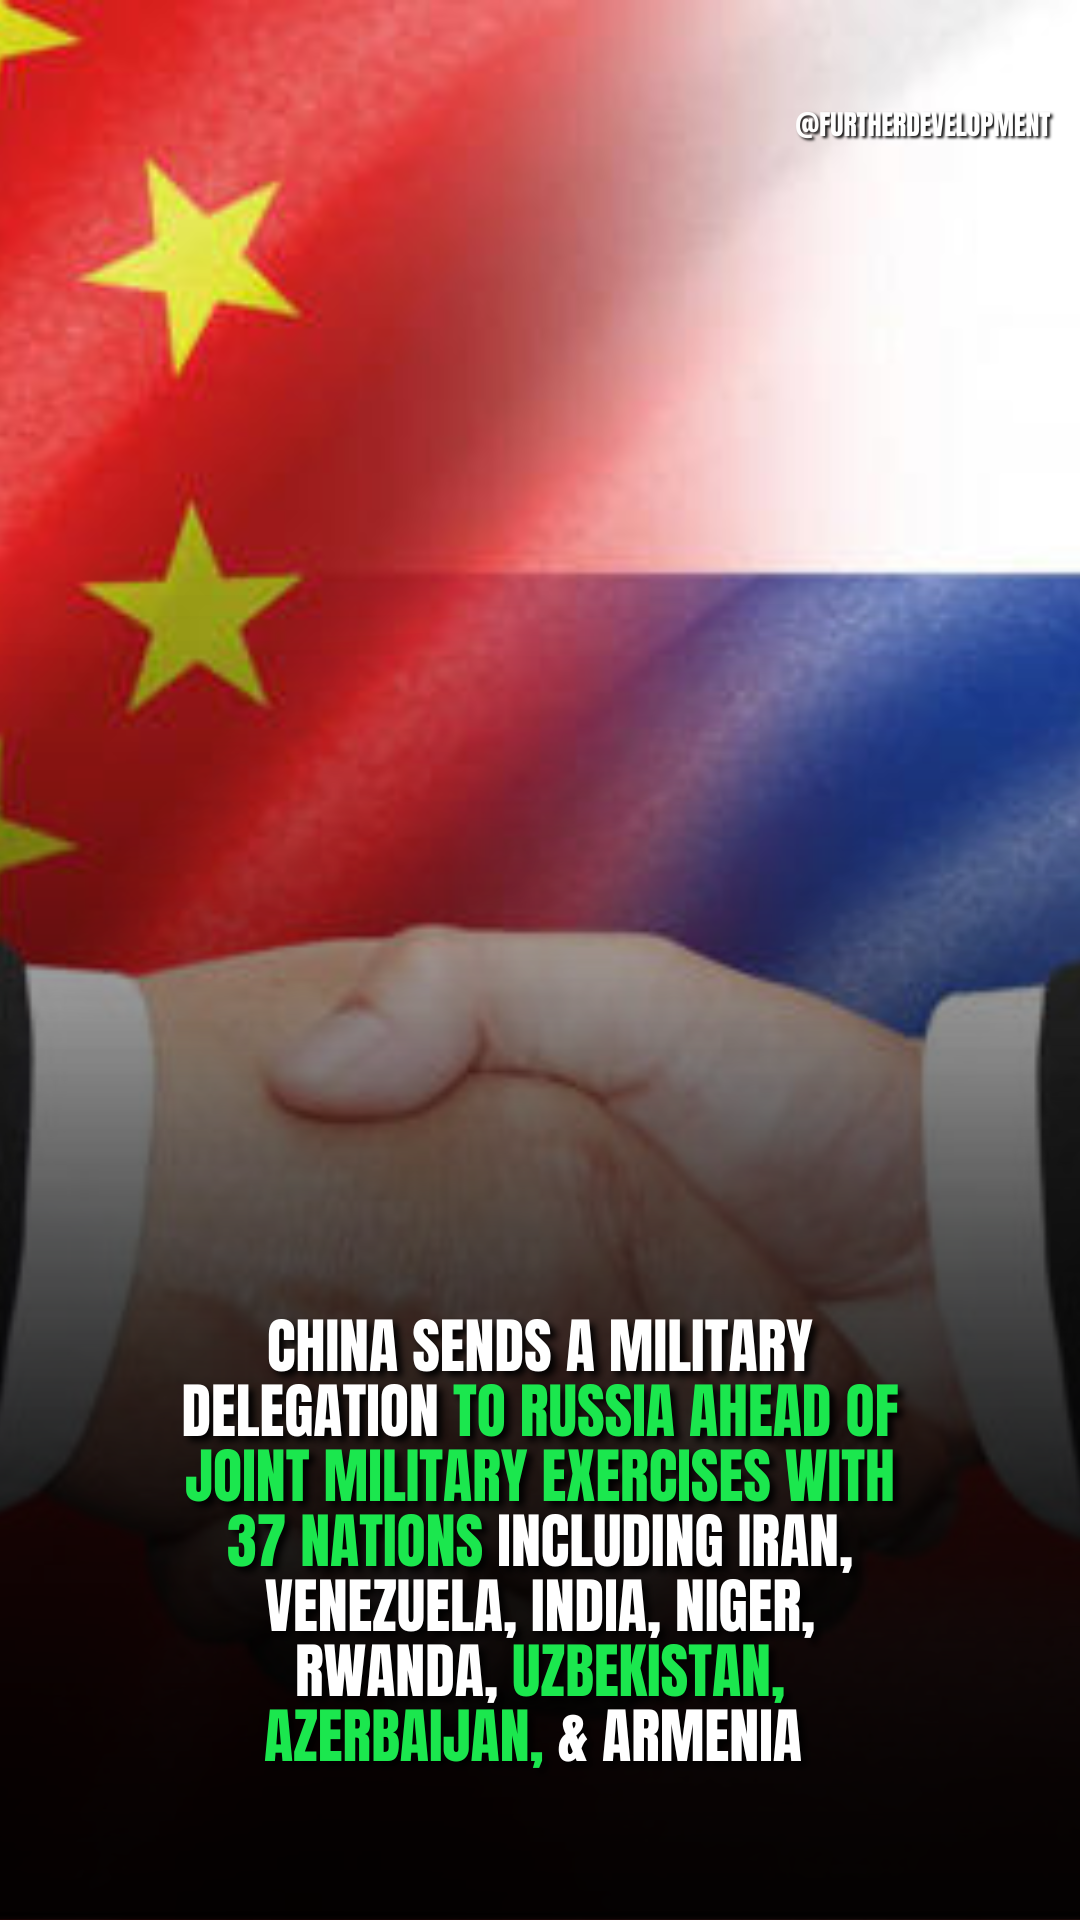 China sends a military delegation to Russia ahead of joint military exercises with 37 nations including Iran, Venezuela, India, Niger, Rwanda, Uzbekistan, Azerbaijan, & Armenia